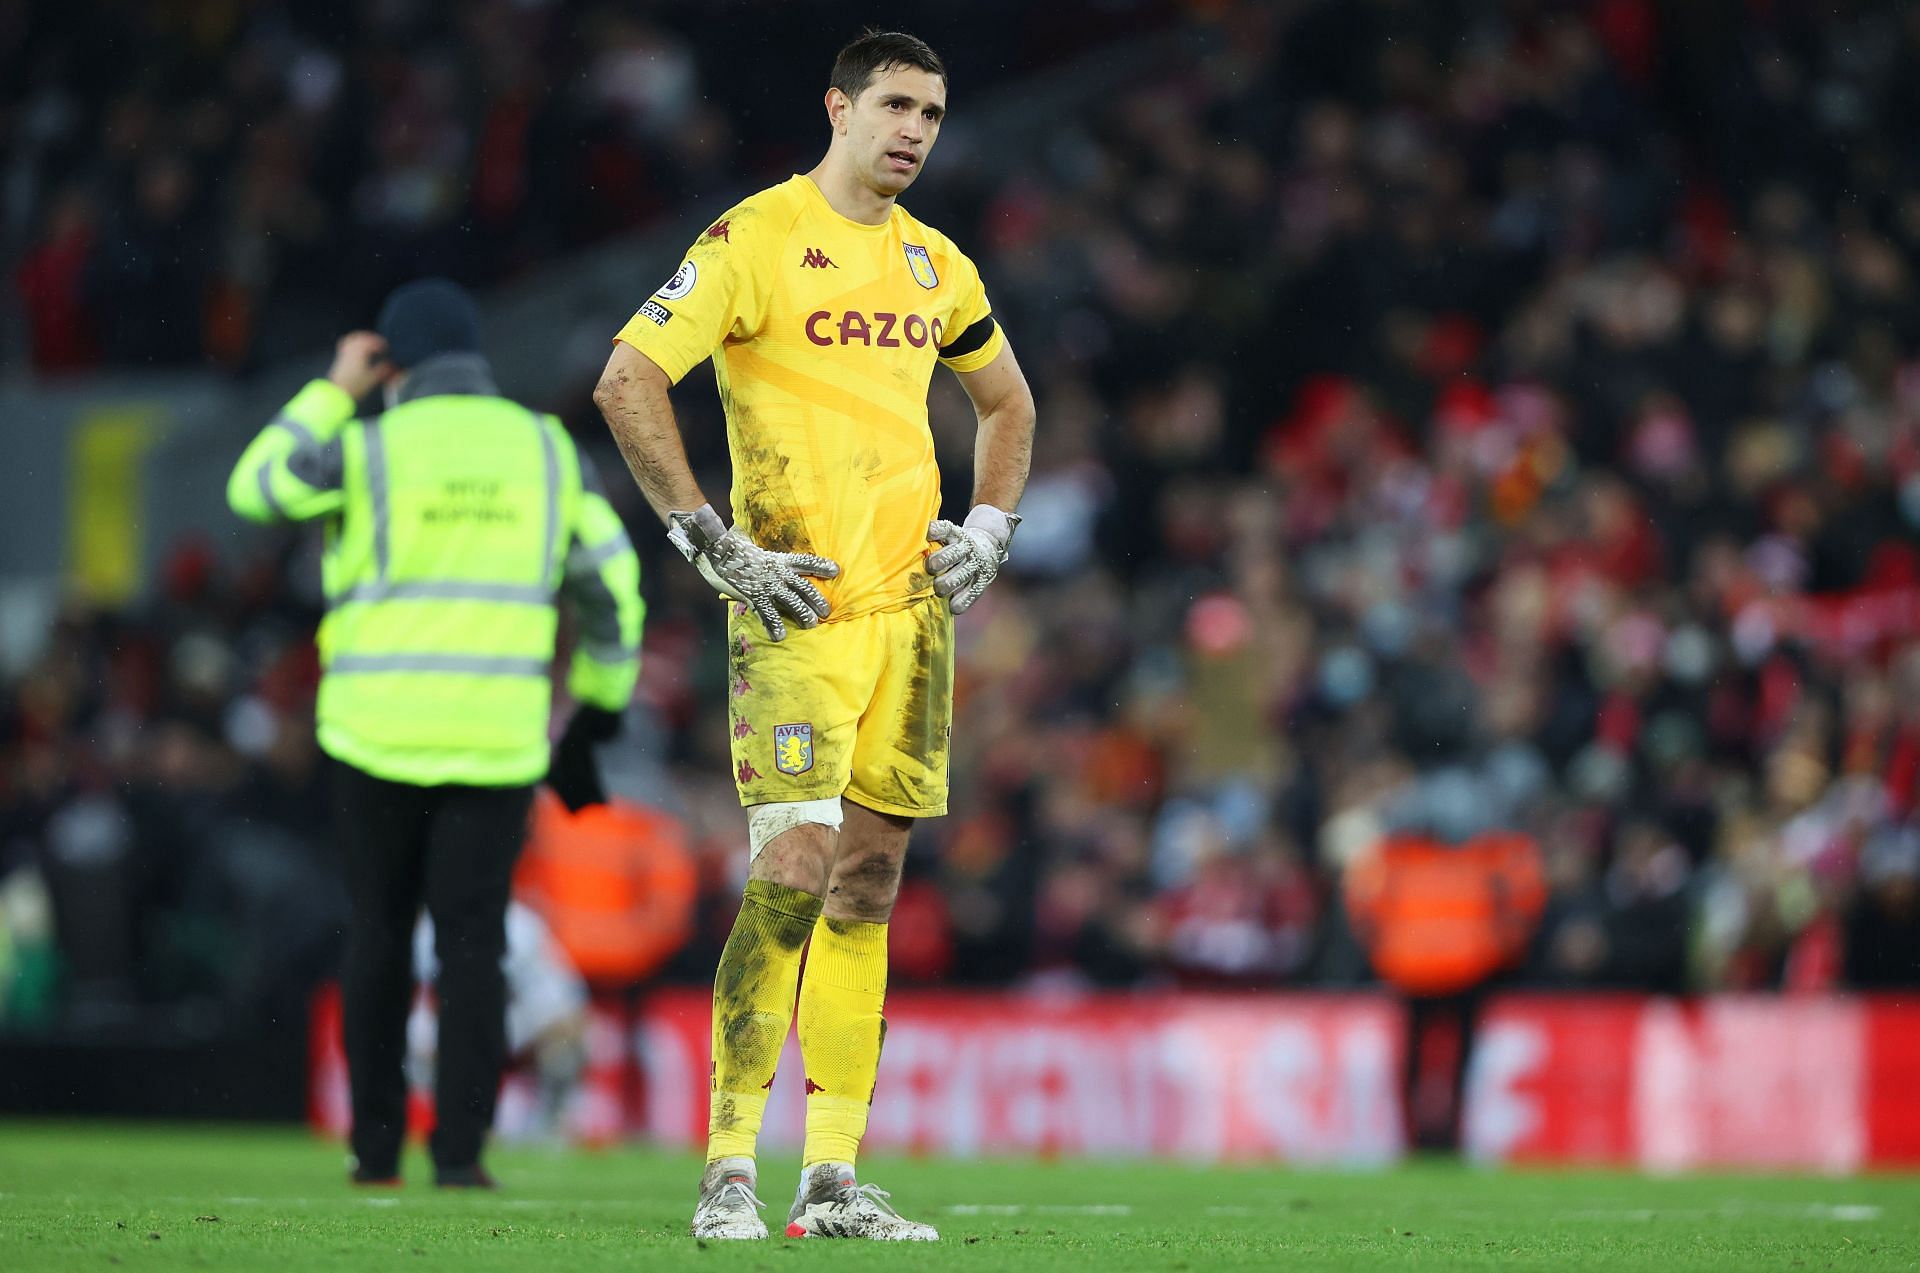 Martinez was defiant against Liverpool